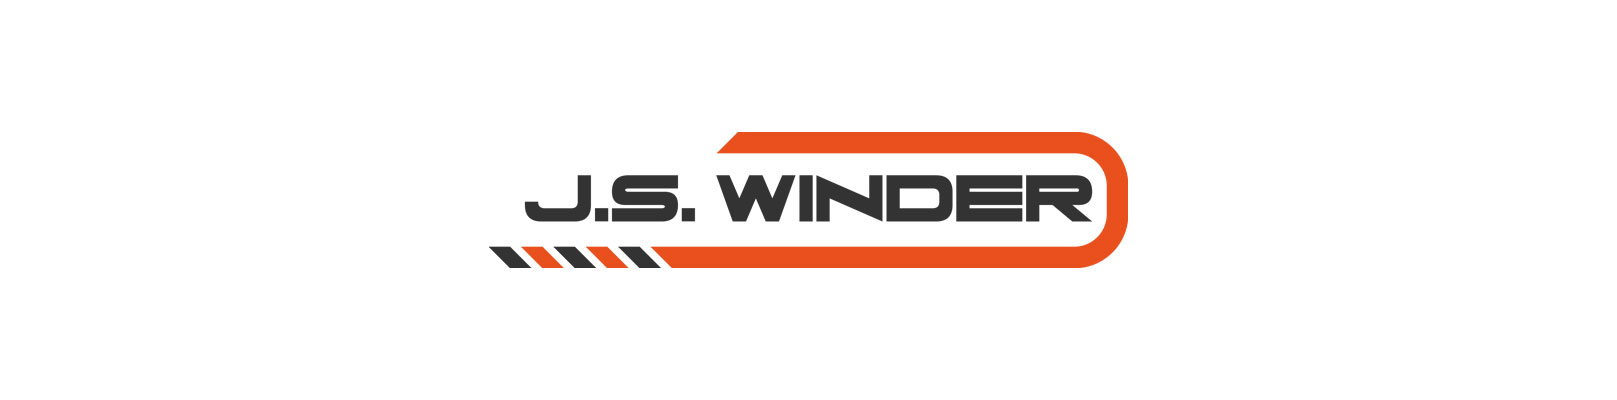 jswinder ltd logo